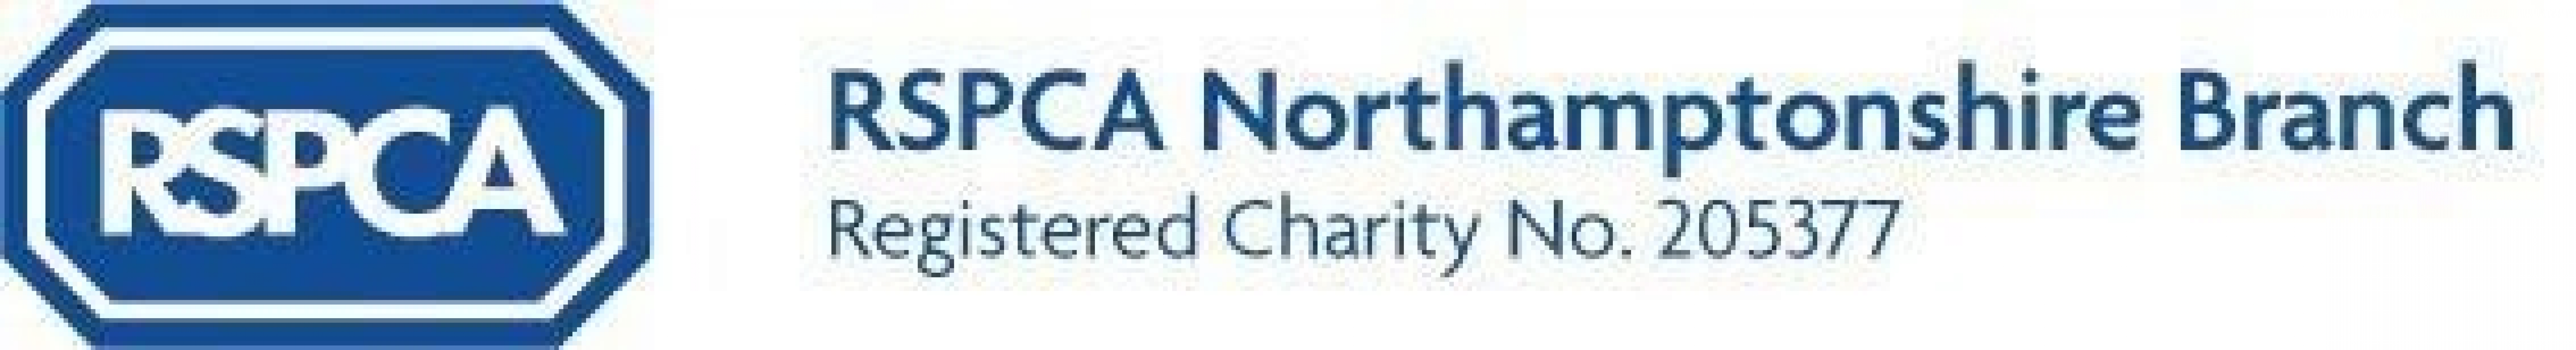 RSPCA Northamptonshire Branch eCards